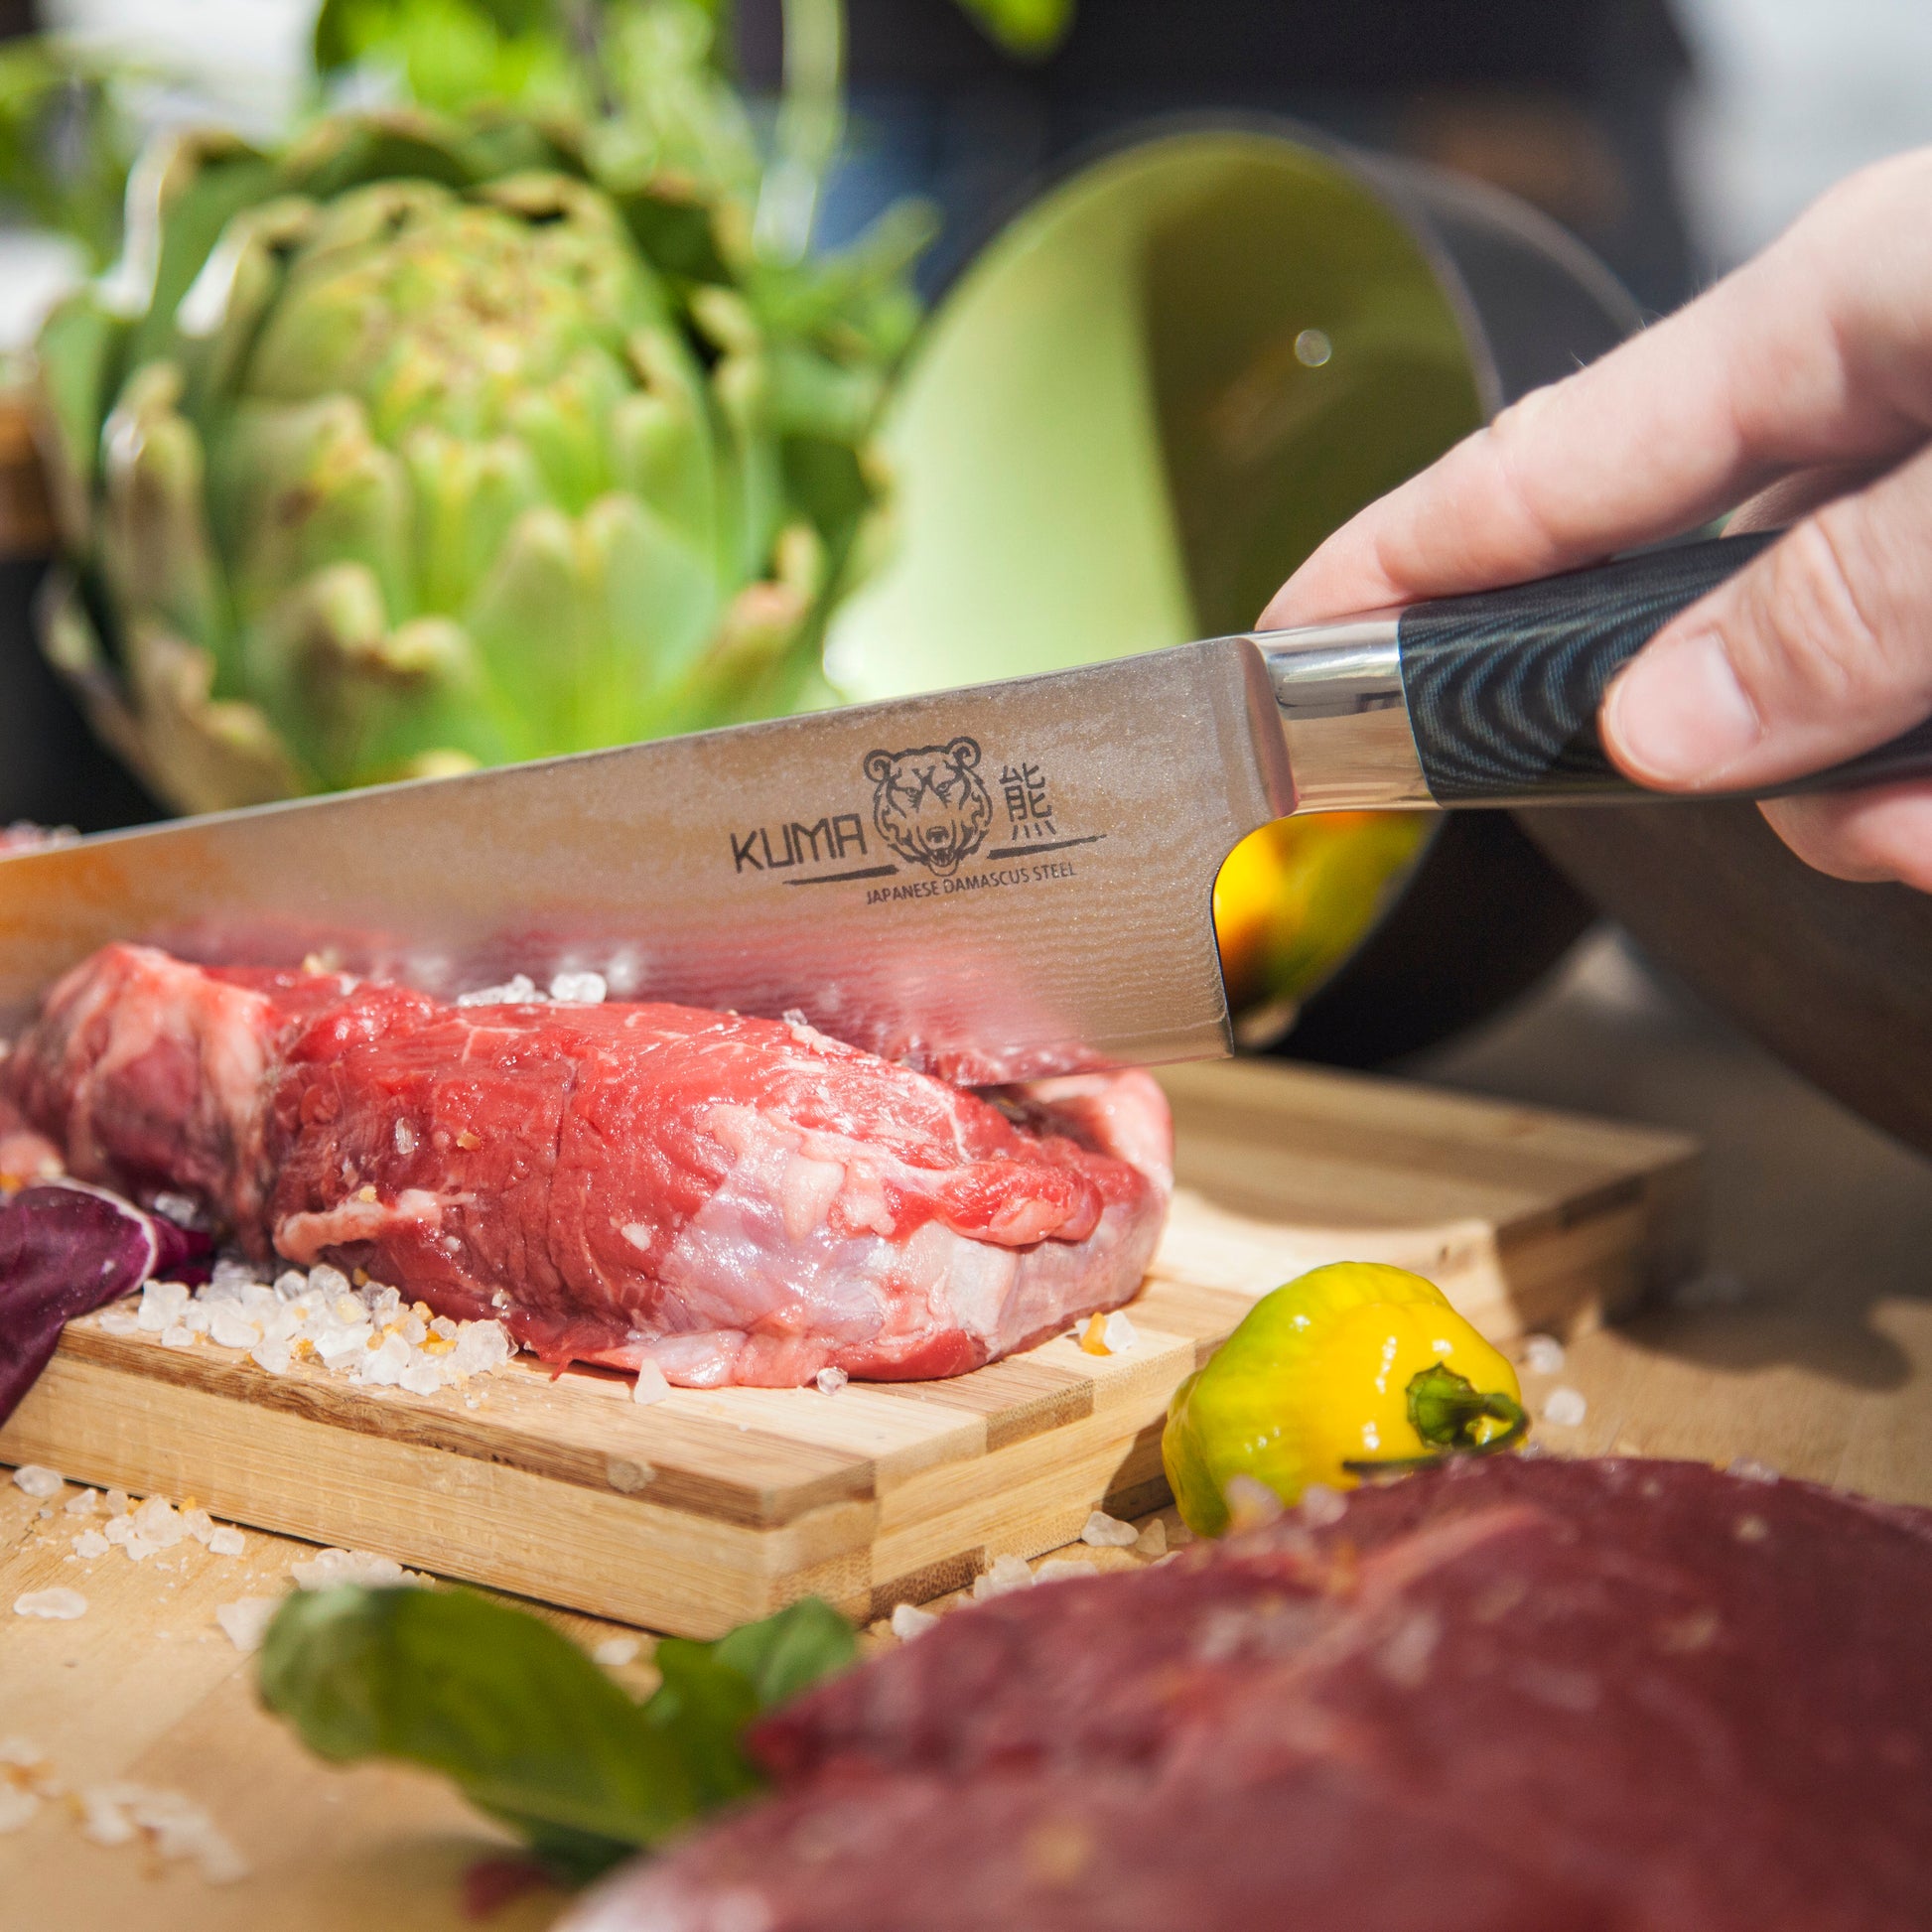 Home Kitchen Steel Chef Knife: Premium Razor Sharp 8 Inch Stain & Wear – I  Want Home & Kitchen